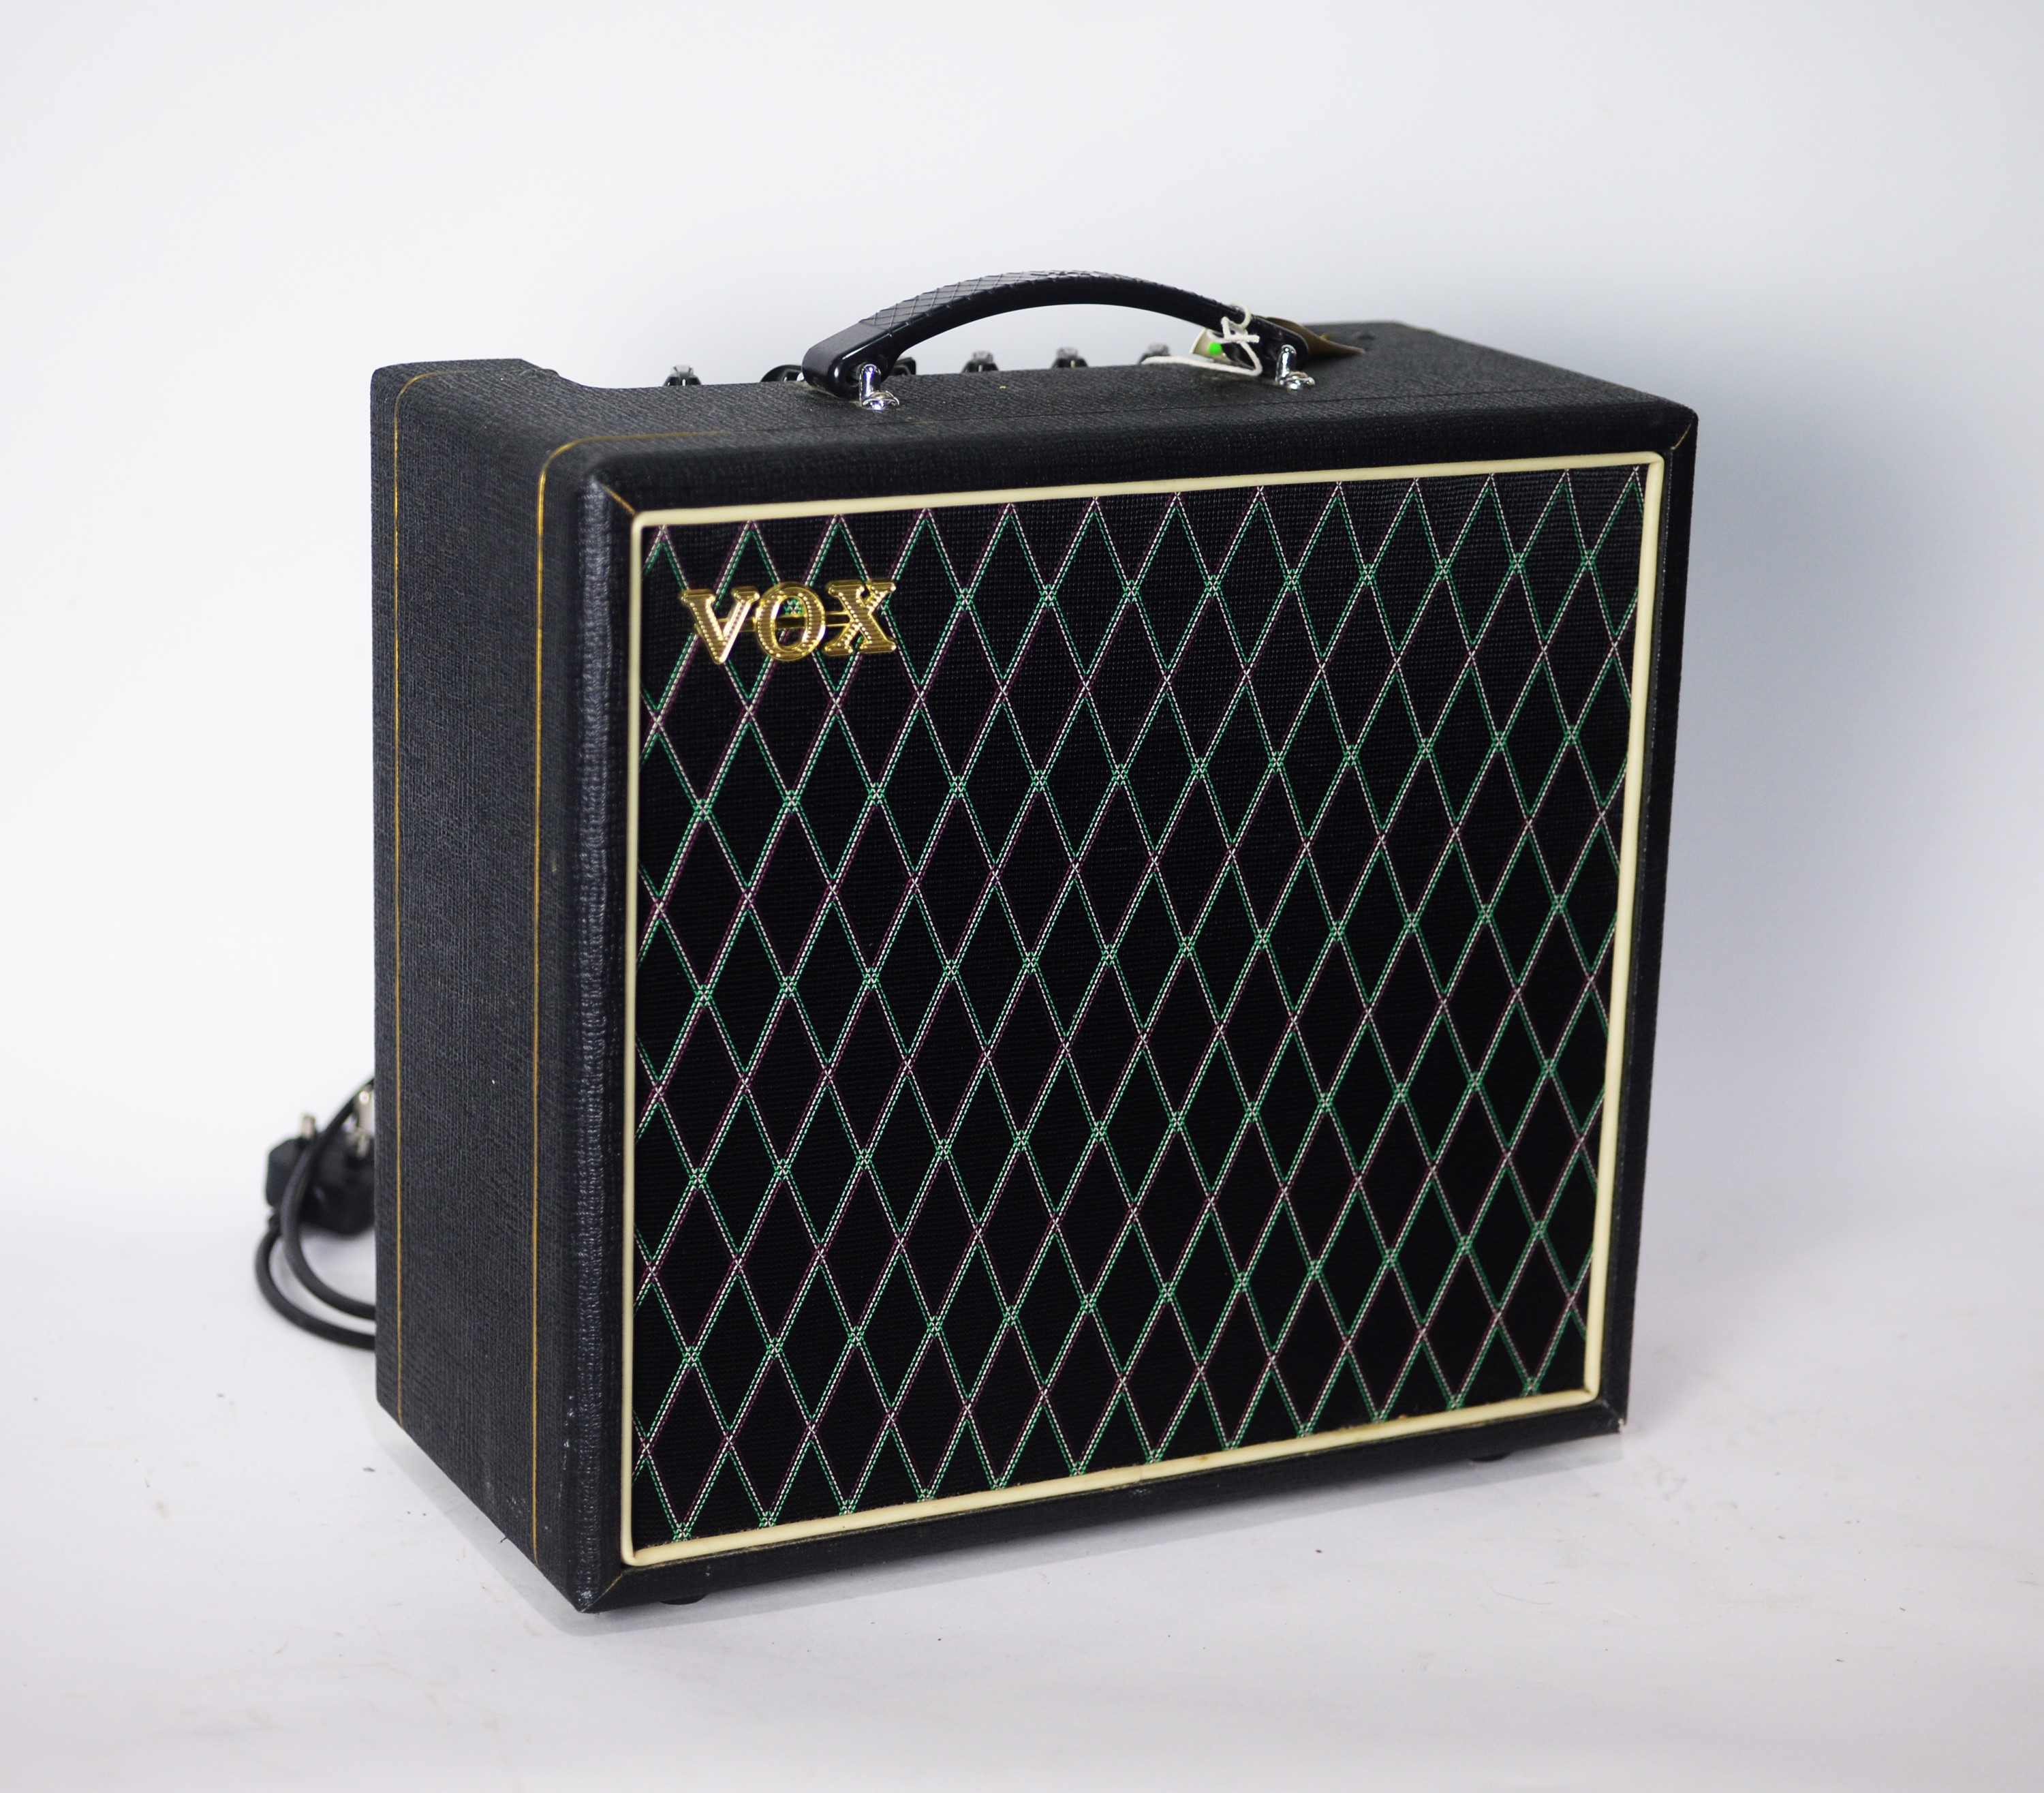 Vox Pathfinder 15 EXR guitar amplifier